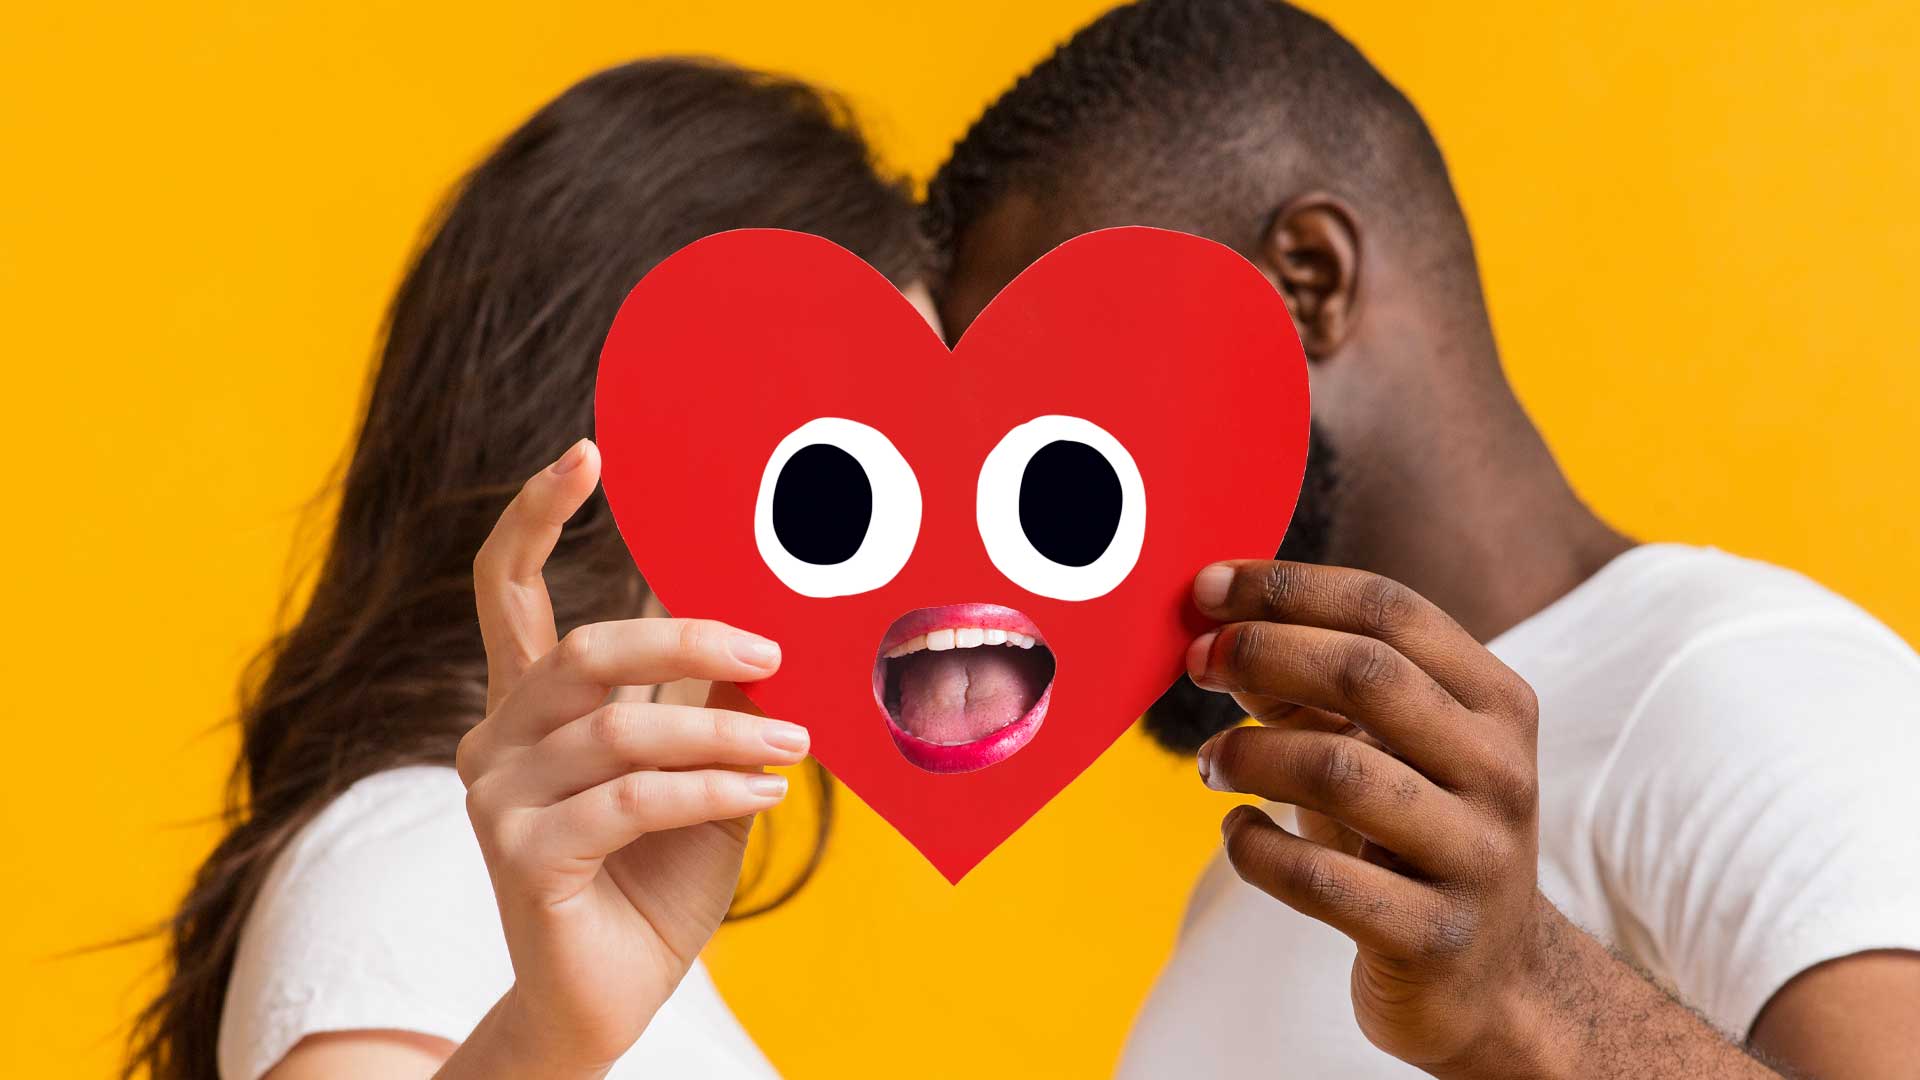 A couple holding a heart-shaped card